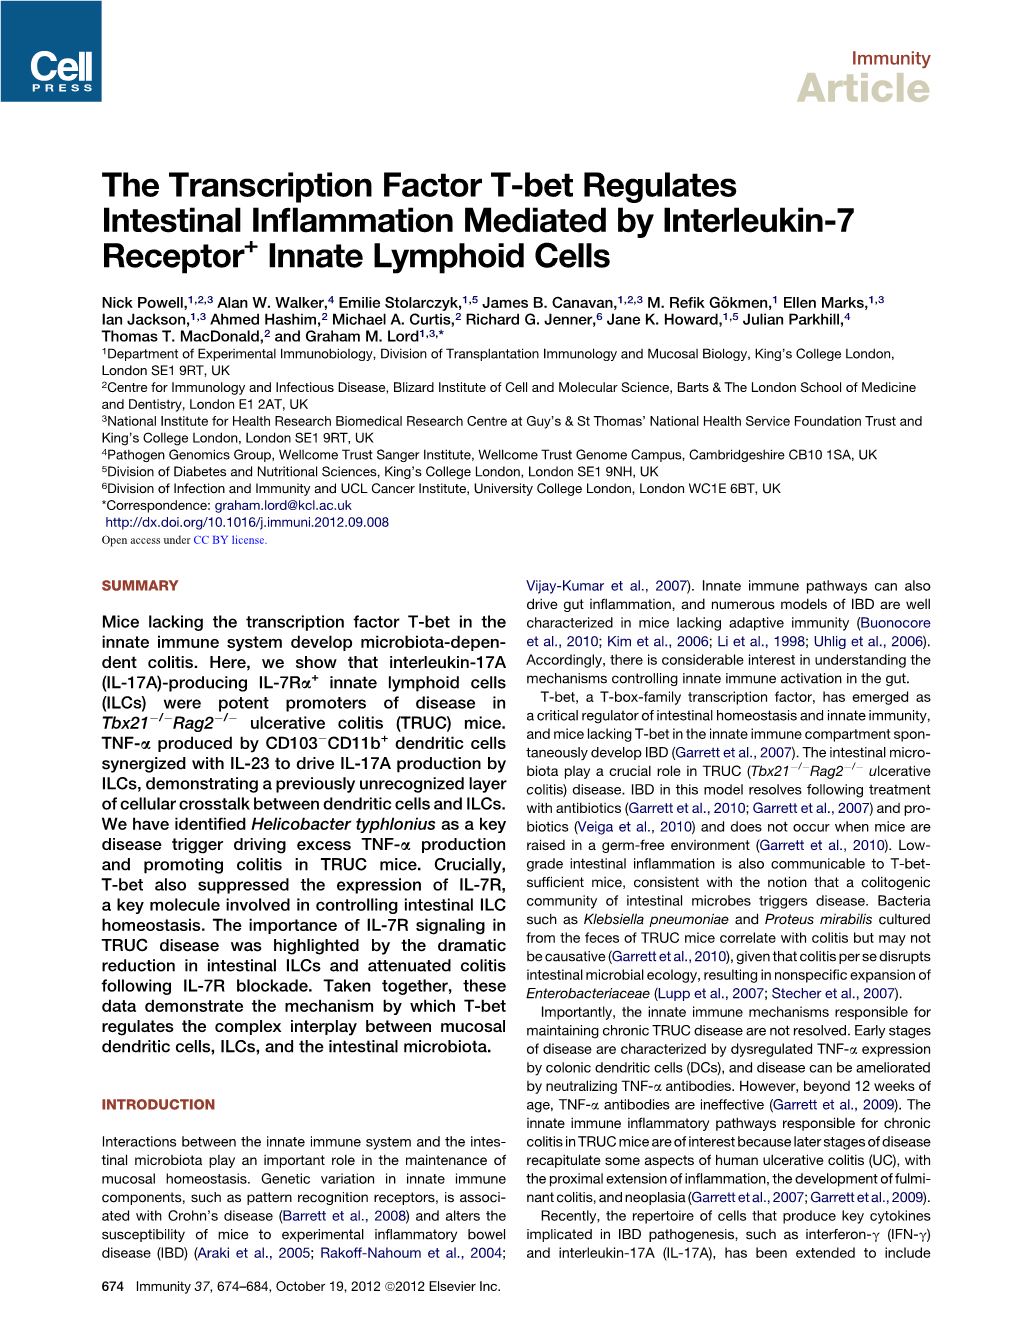 The Transcription Factor T-Bet Regulates Intestinal Inflammation